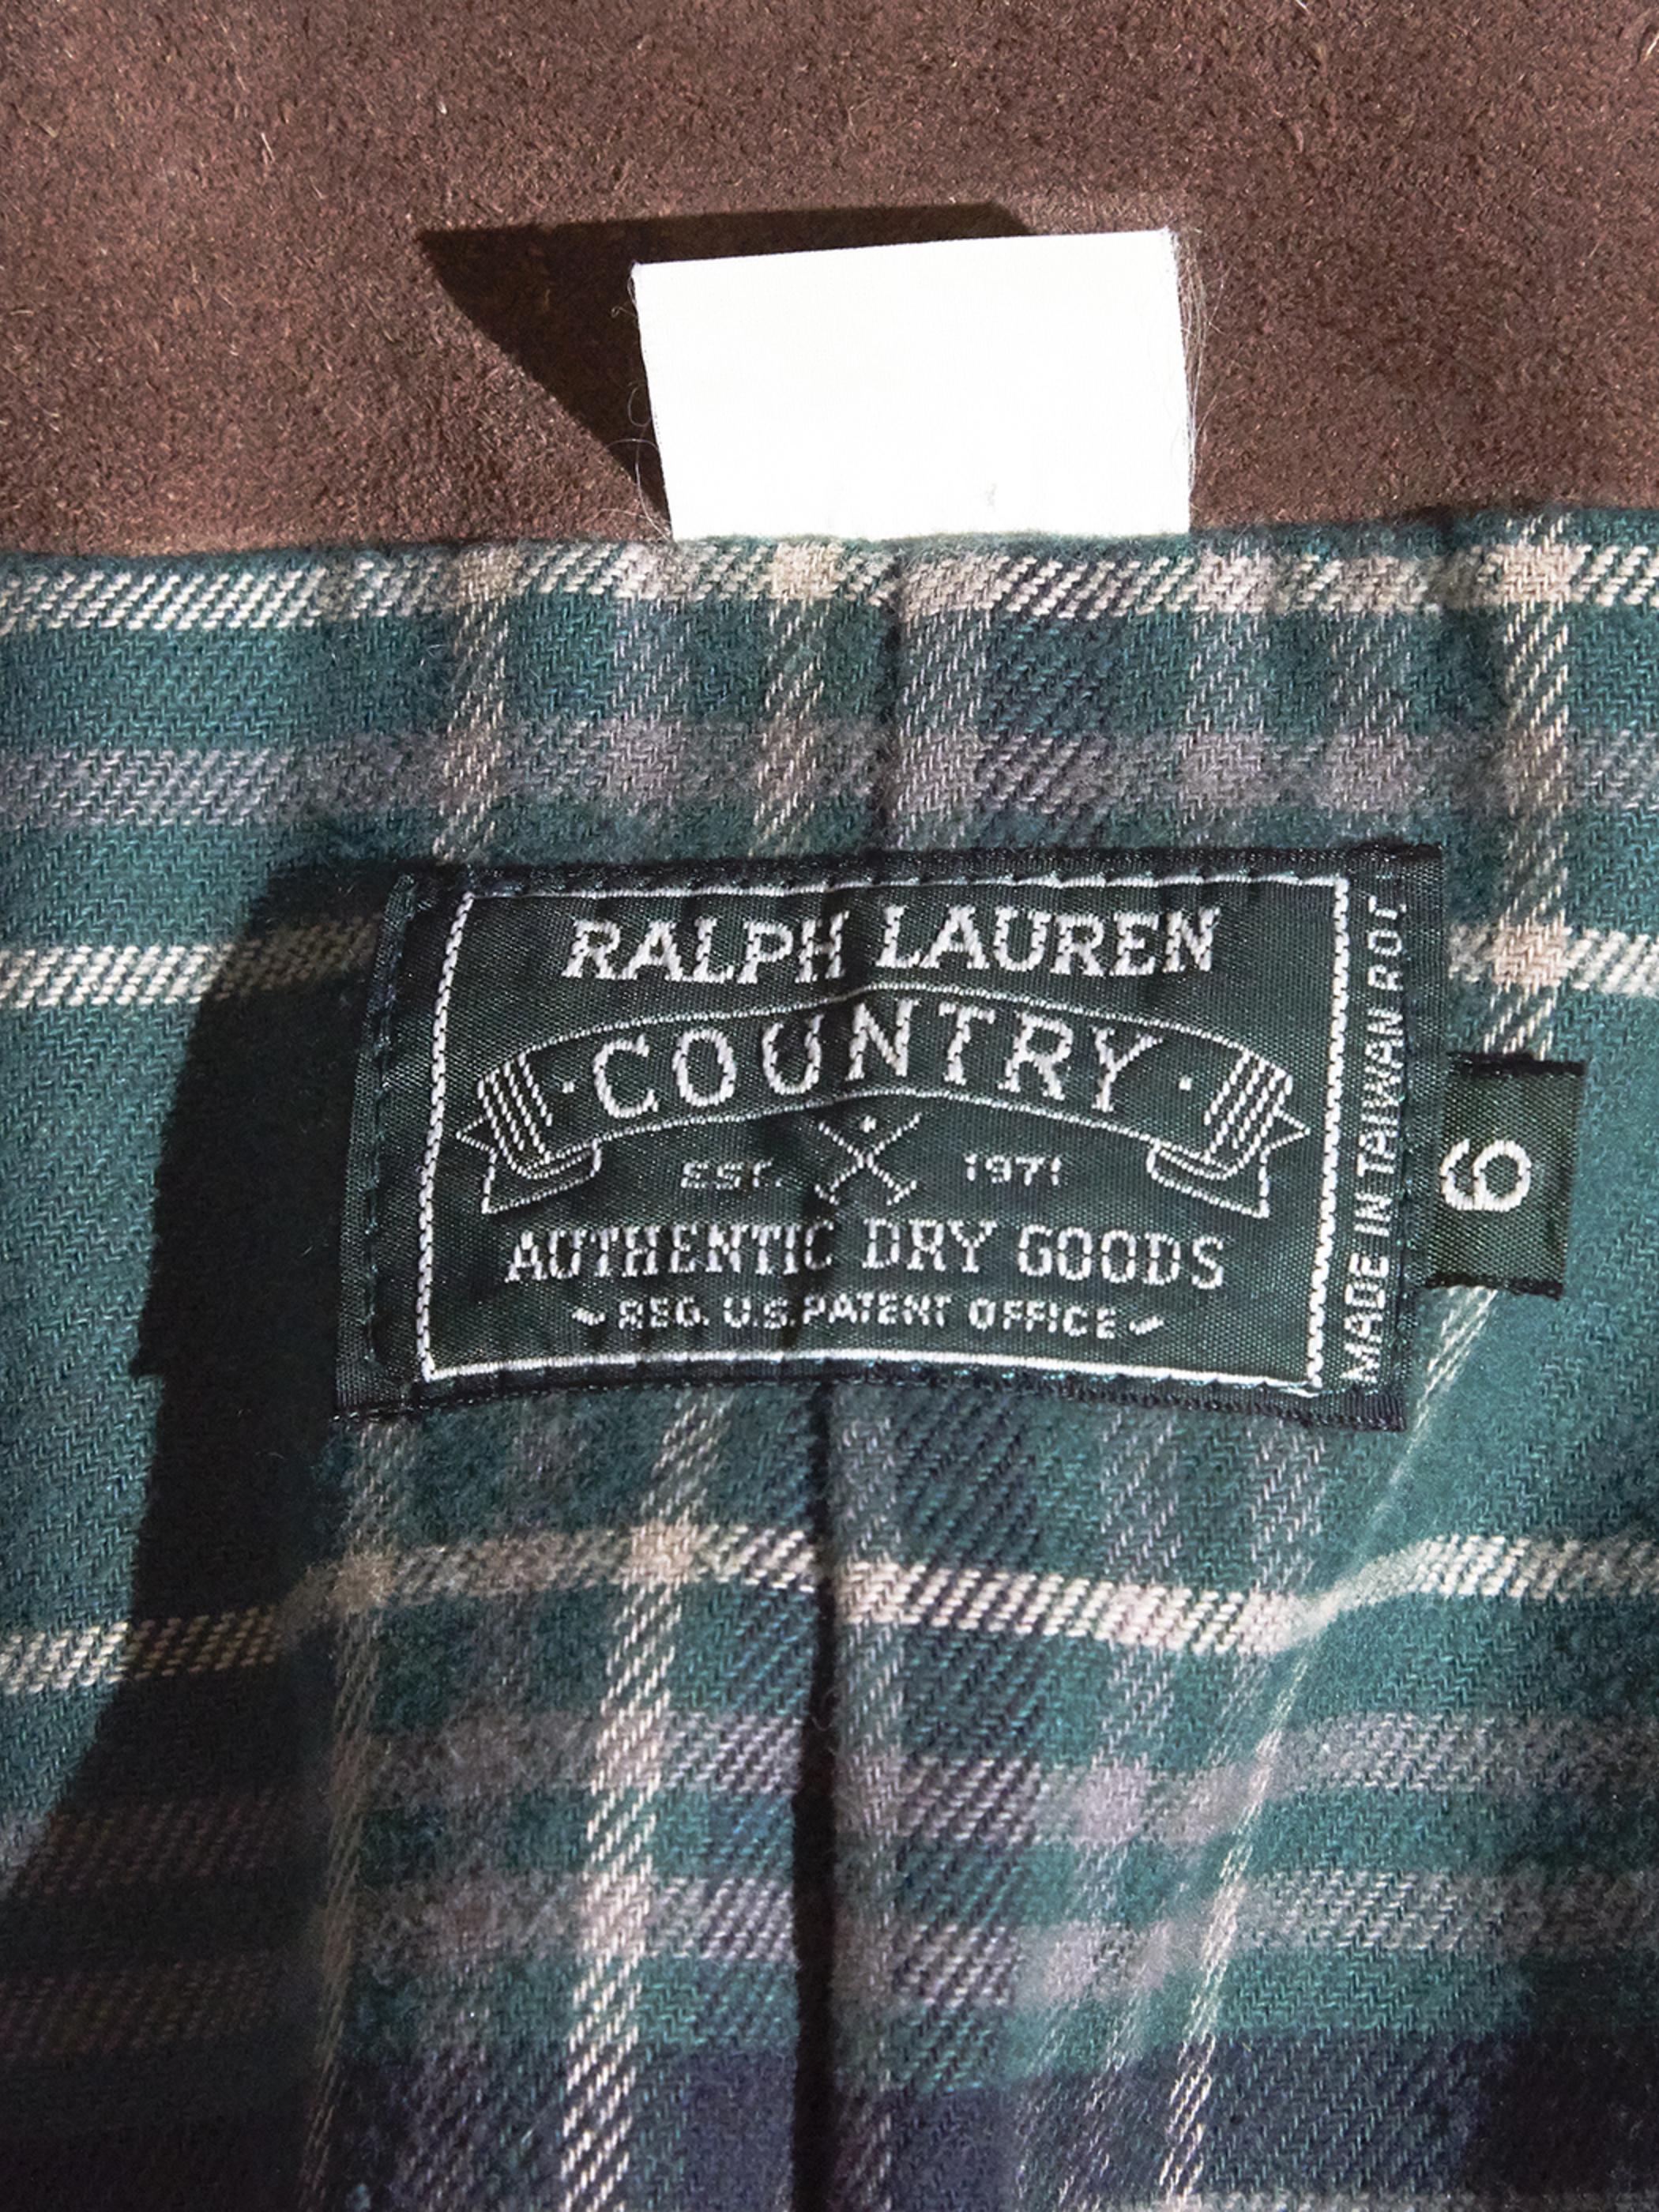 1990s "RALPH LAURENT COUNTRY" suede sport jacket -BROWN-